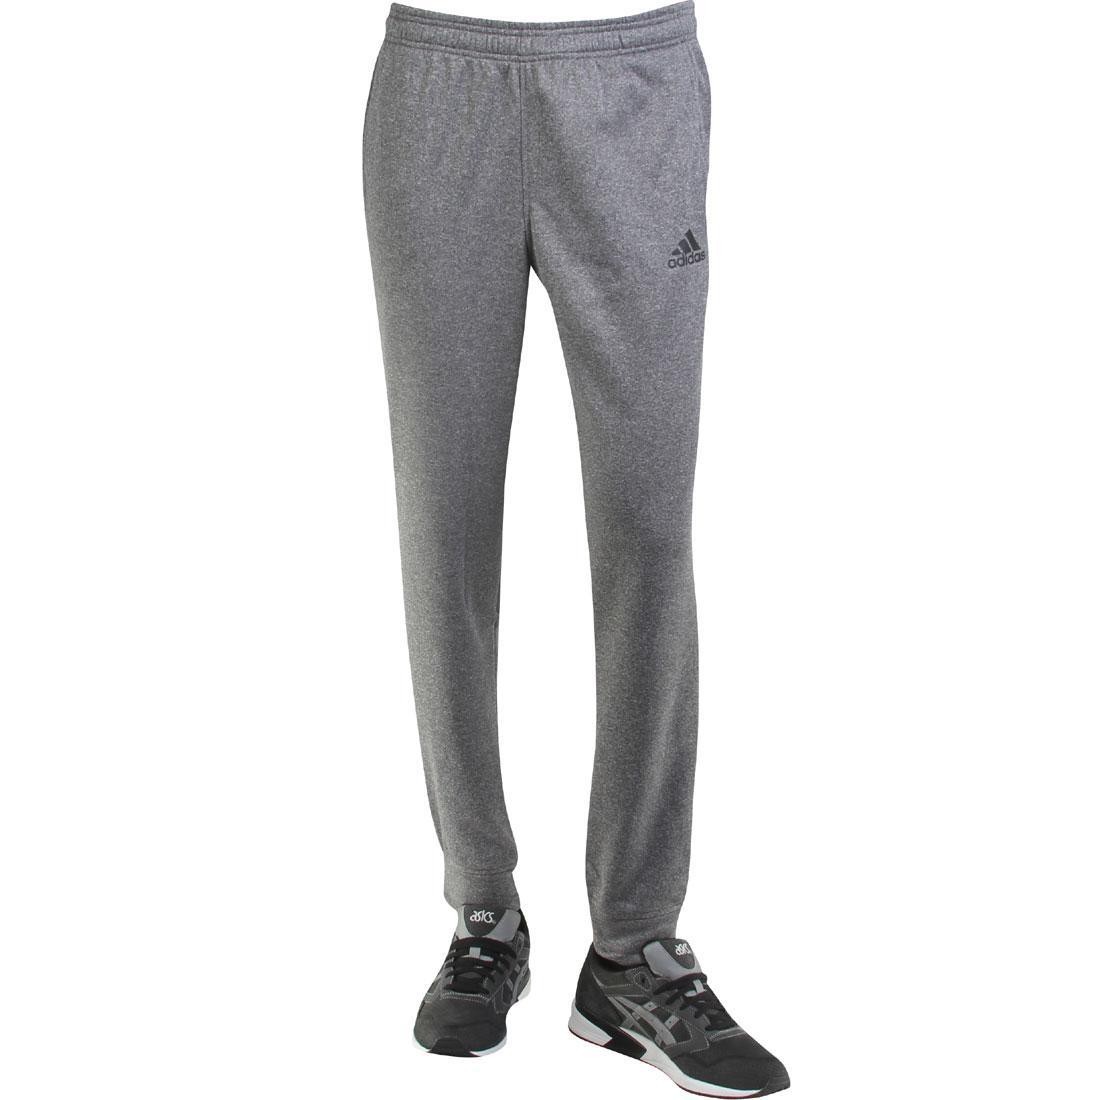 Adidas Ult Slim Pants (gray / dgsogr / black)